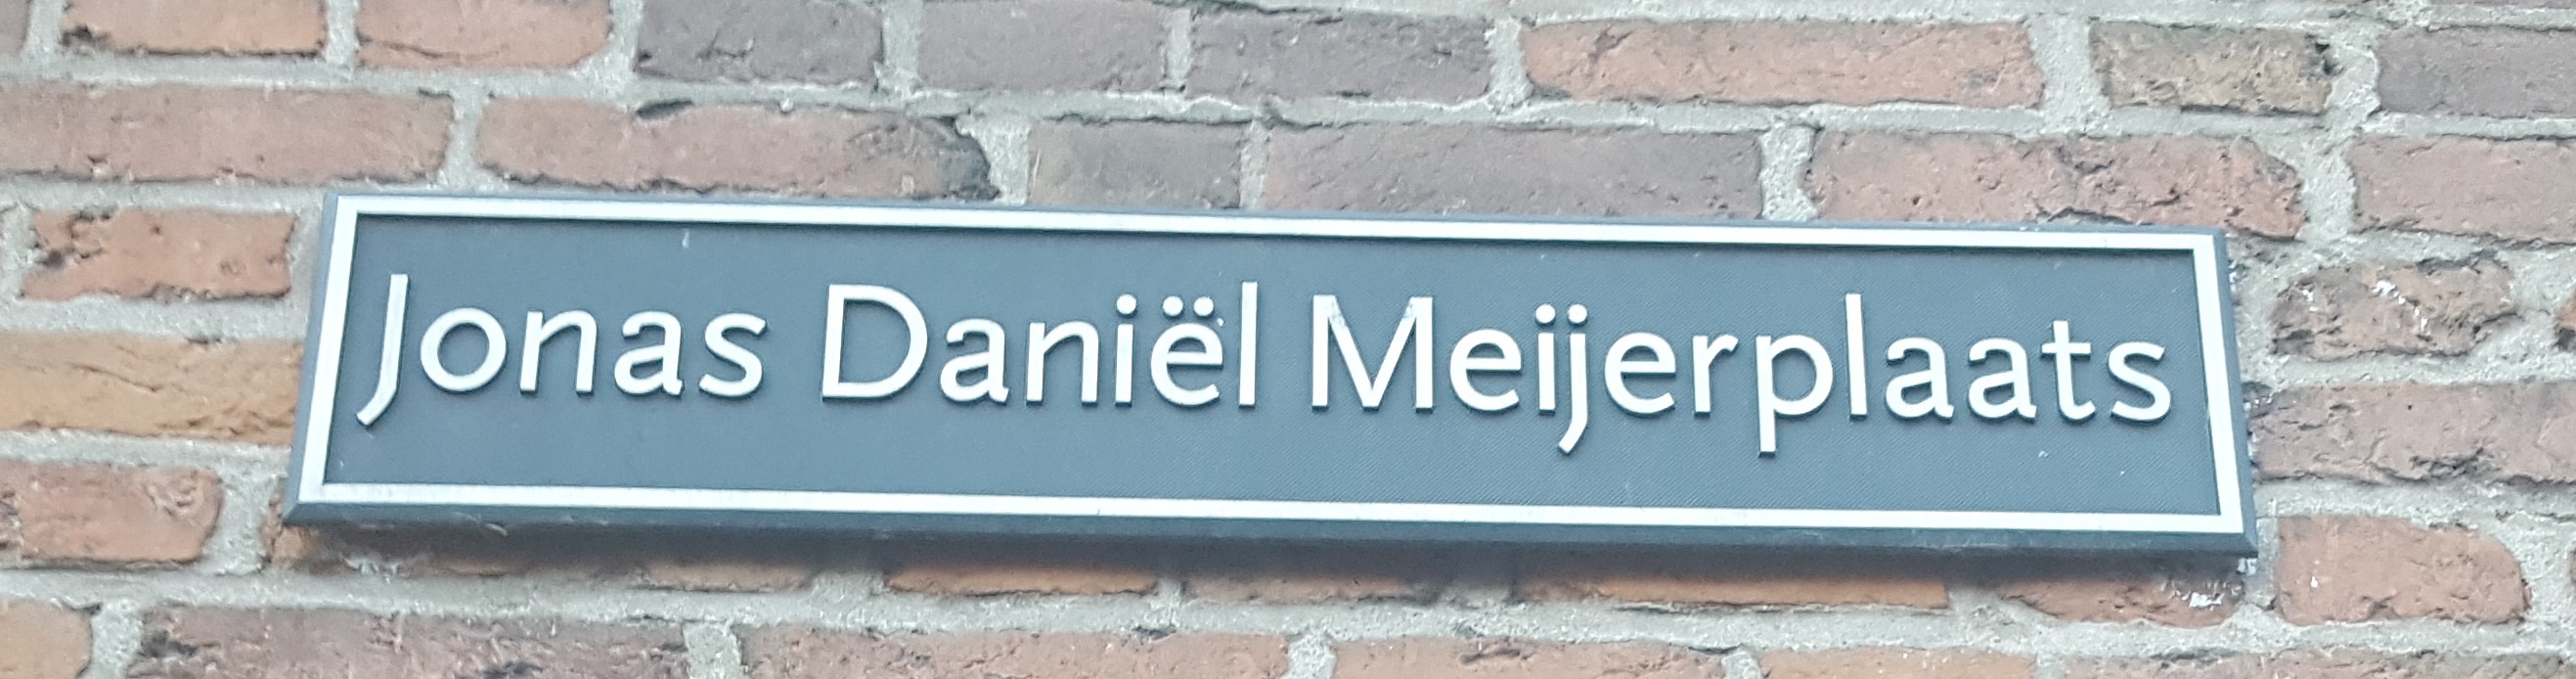 Jonas Daniel Meijerplaats Arnhem'